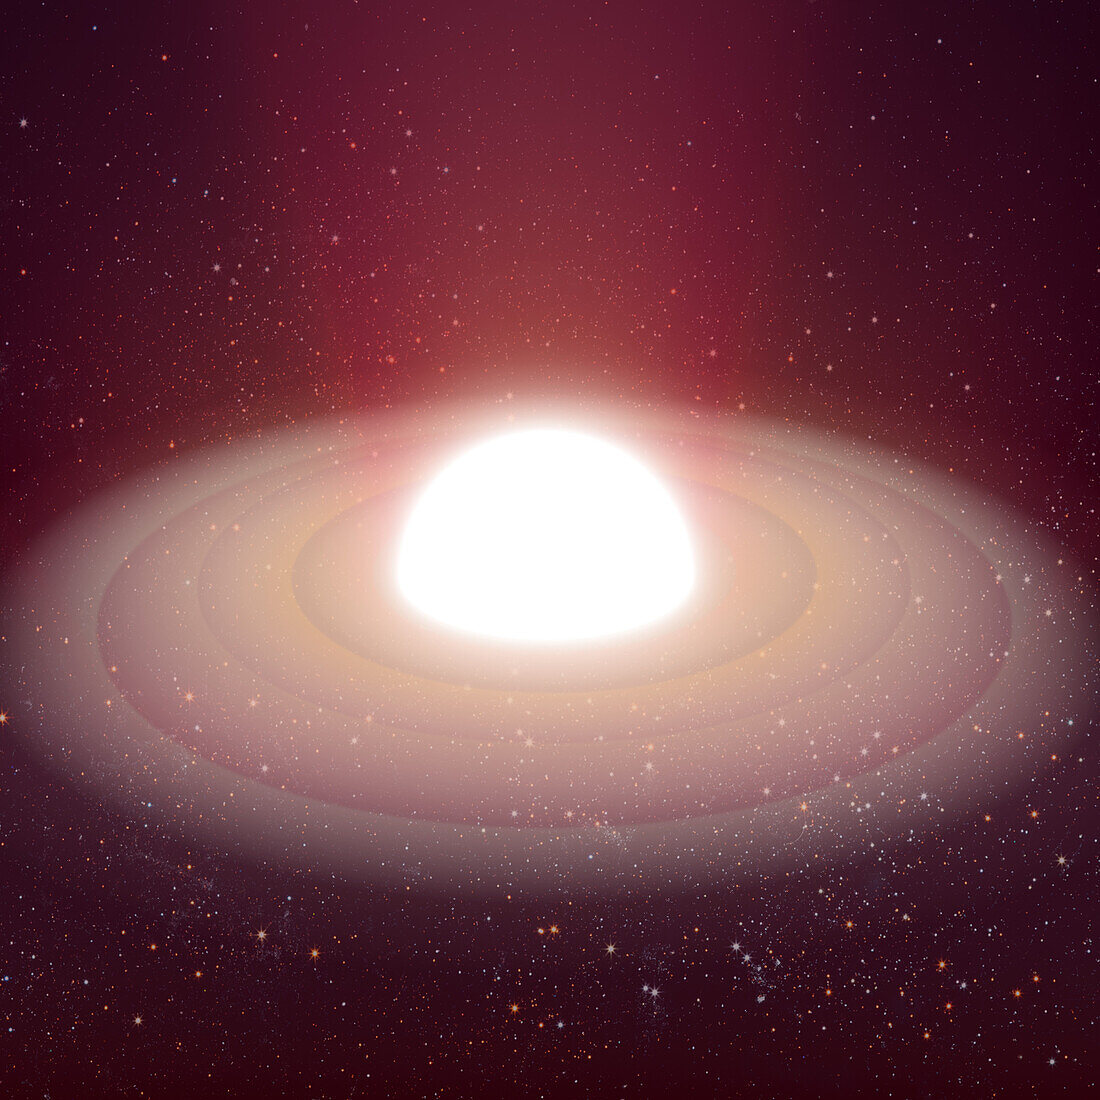 Habitable zones surrounding bloated star, illustration